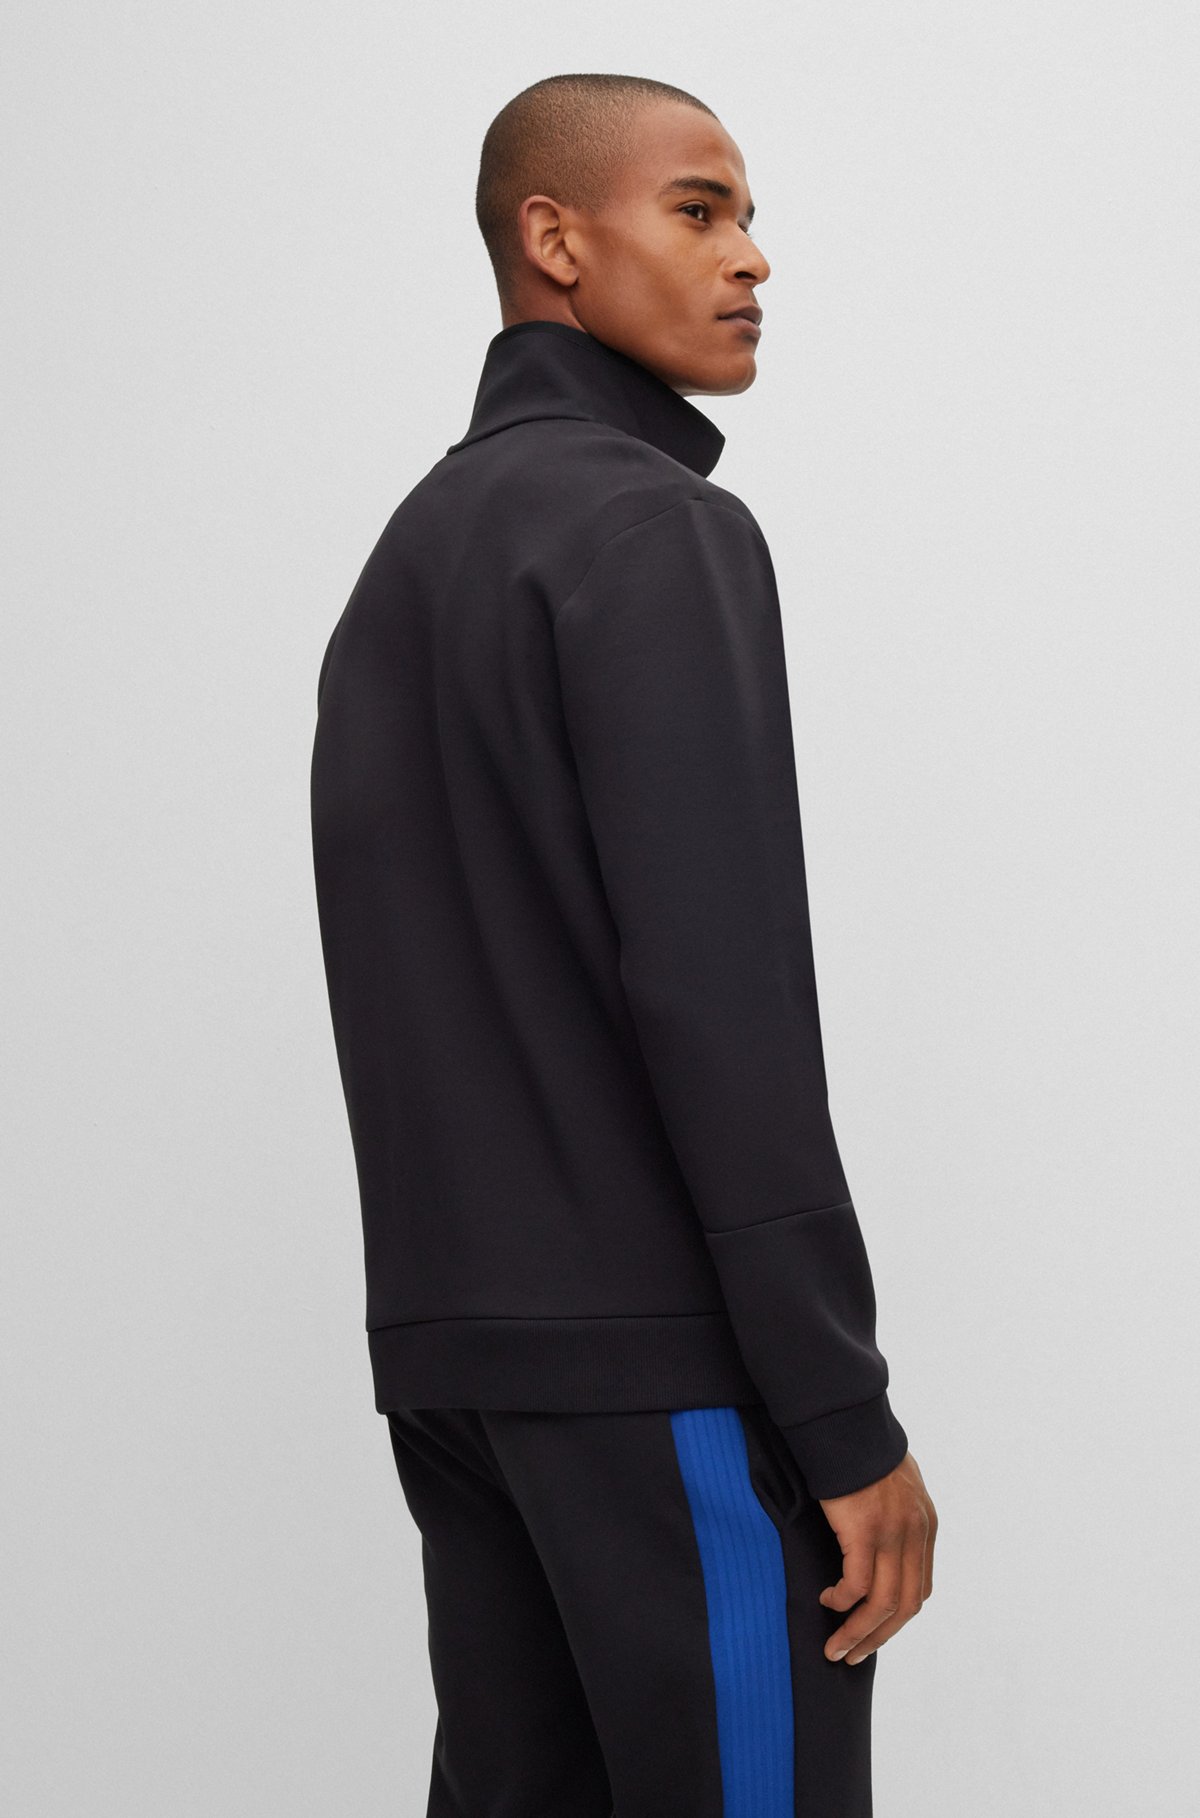 Cotton-blend zip-up sweatshirt with tape trims, Black